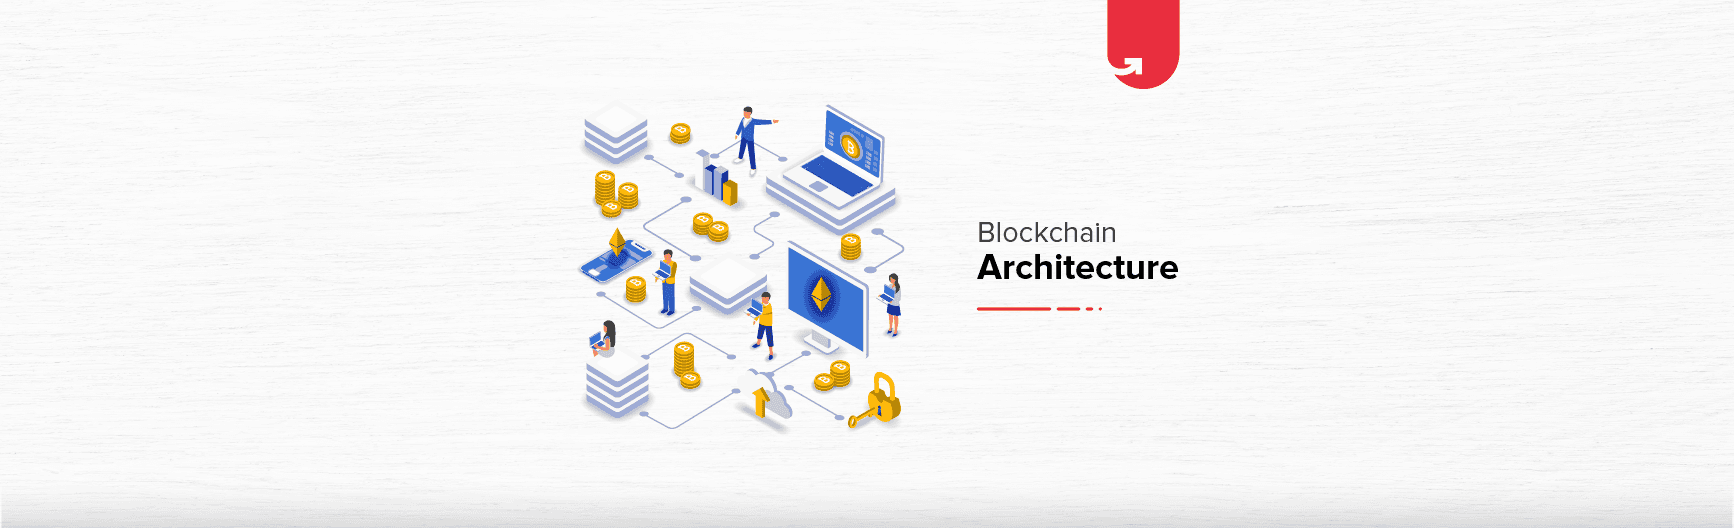 Blockchain Architecture: Blocks, Mining, Transactions &#038; Benefits